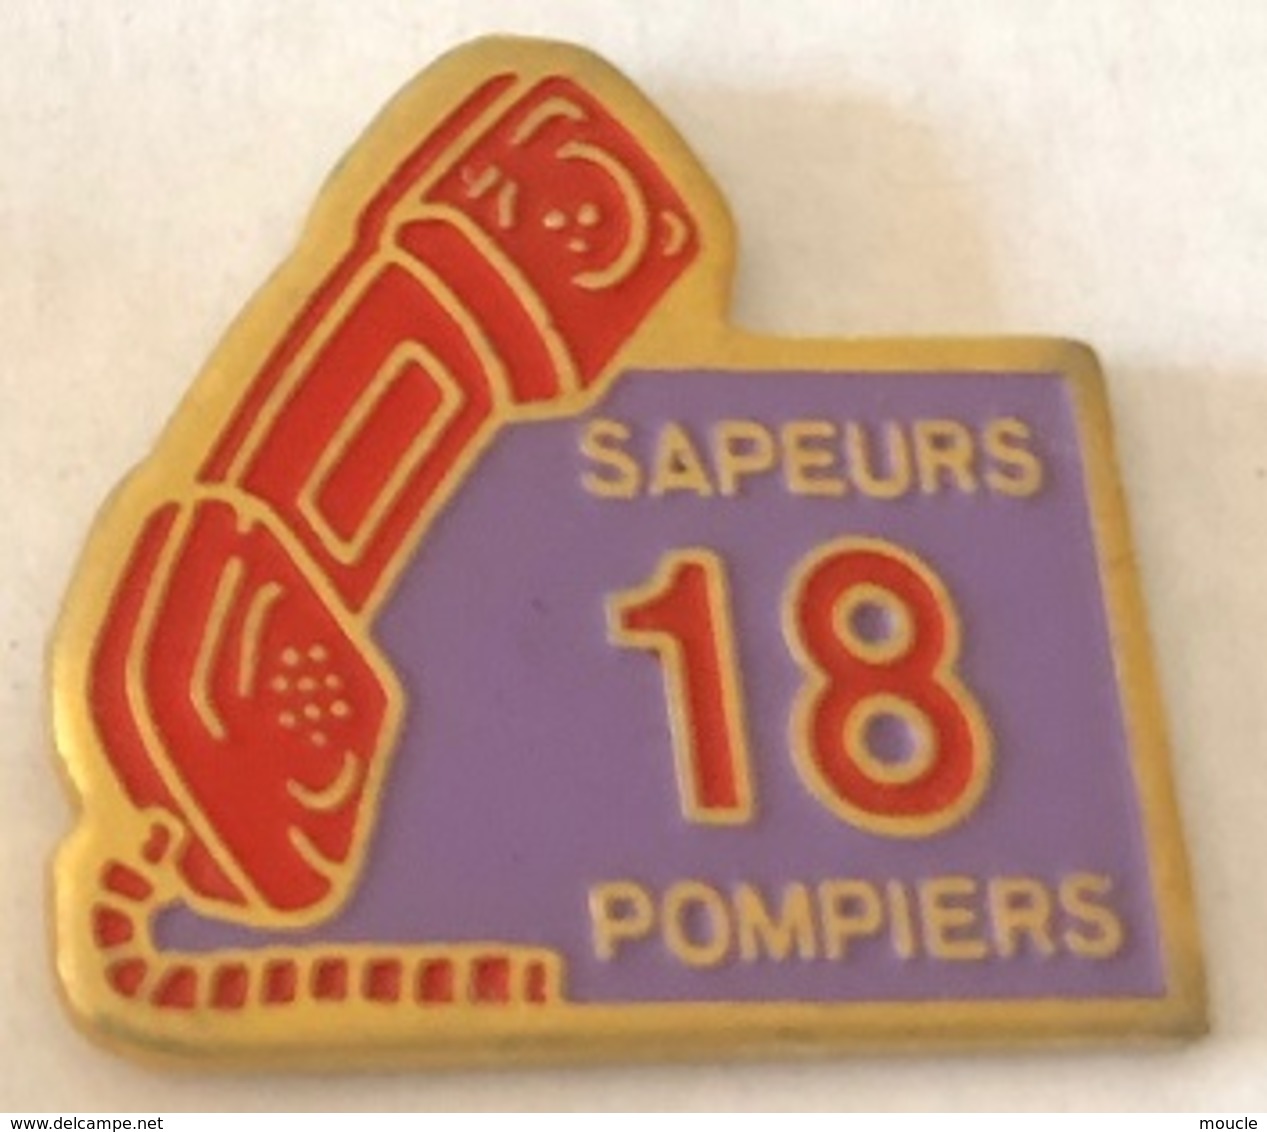 SAPEURS POMPIERS -18 - TELEPHONE - FRANCE - TELEFONO POMPIERE - PHONE FIREFIGHTER - TELEFON  FEUERWEHRMANN - (25) - Feuerwehr